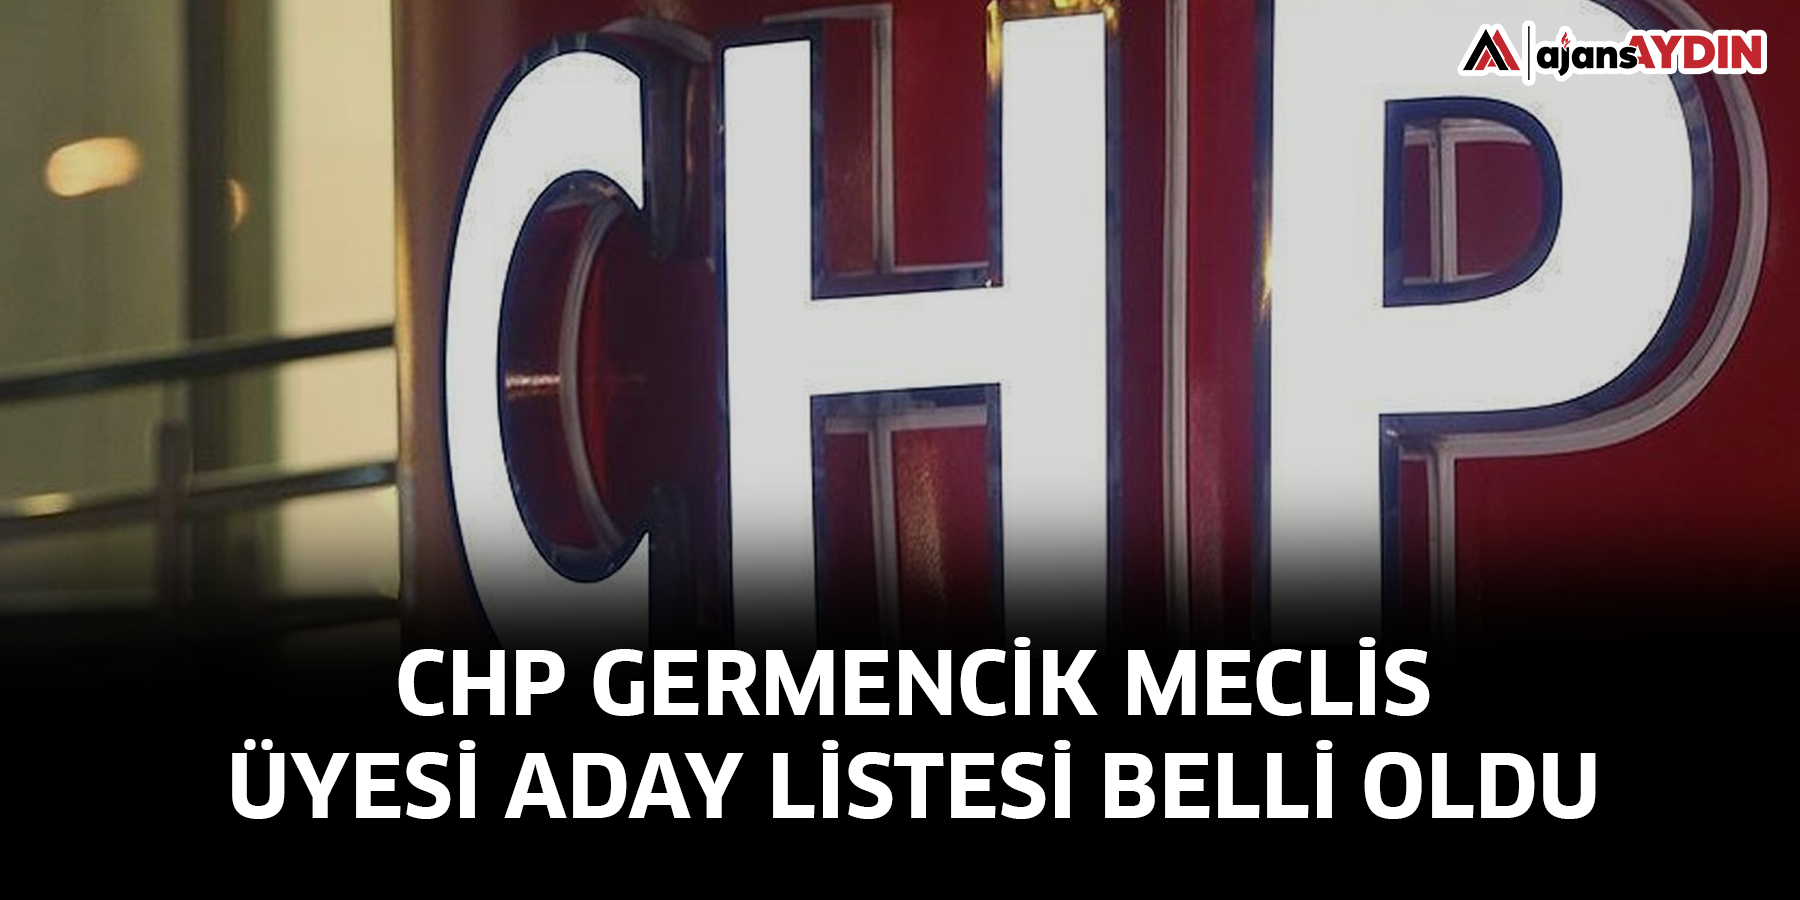 CHP Germencik Meclis Üyesi aday listesi belli oldu